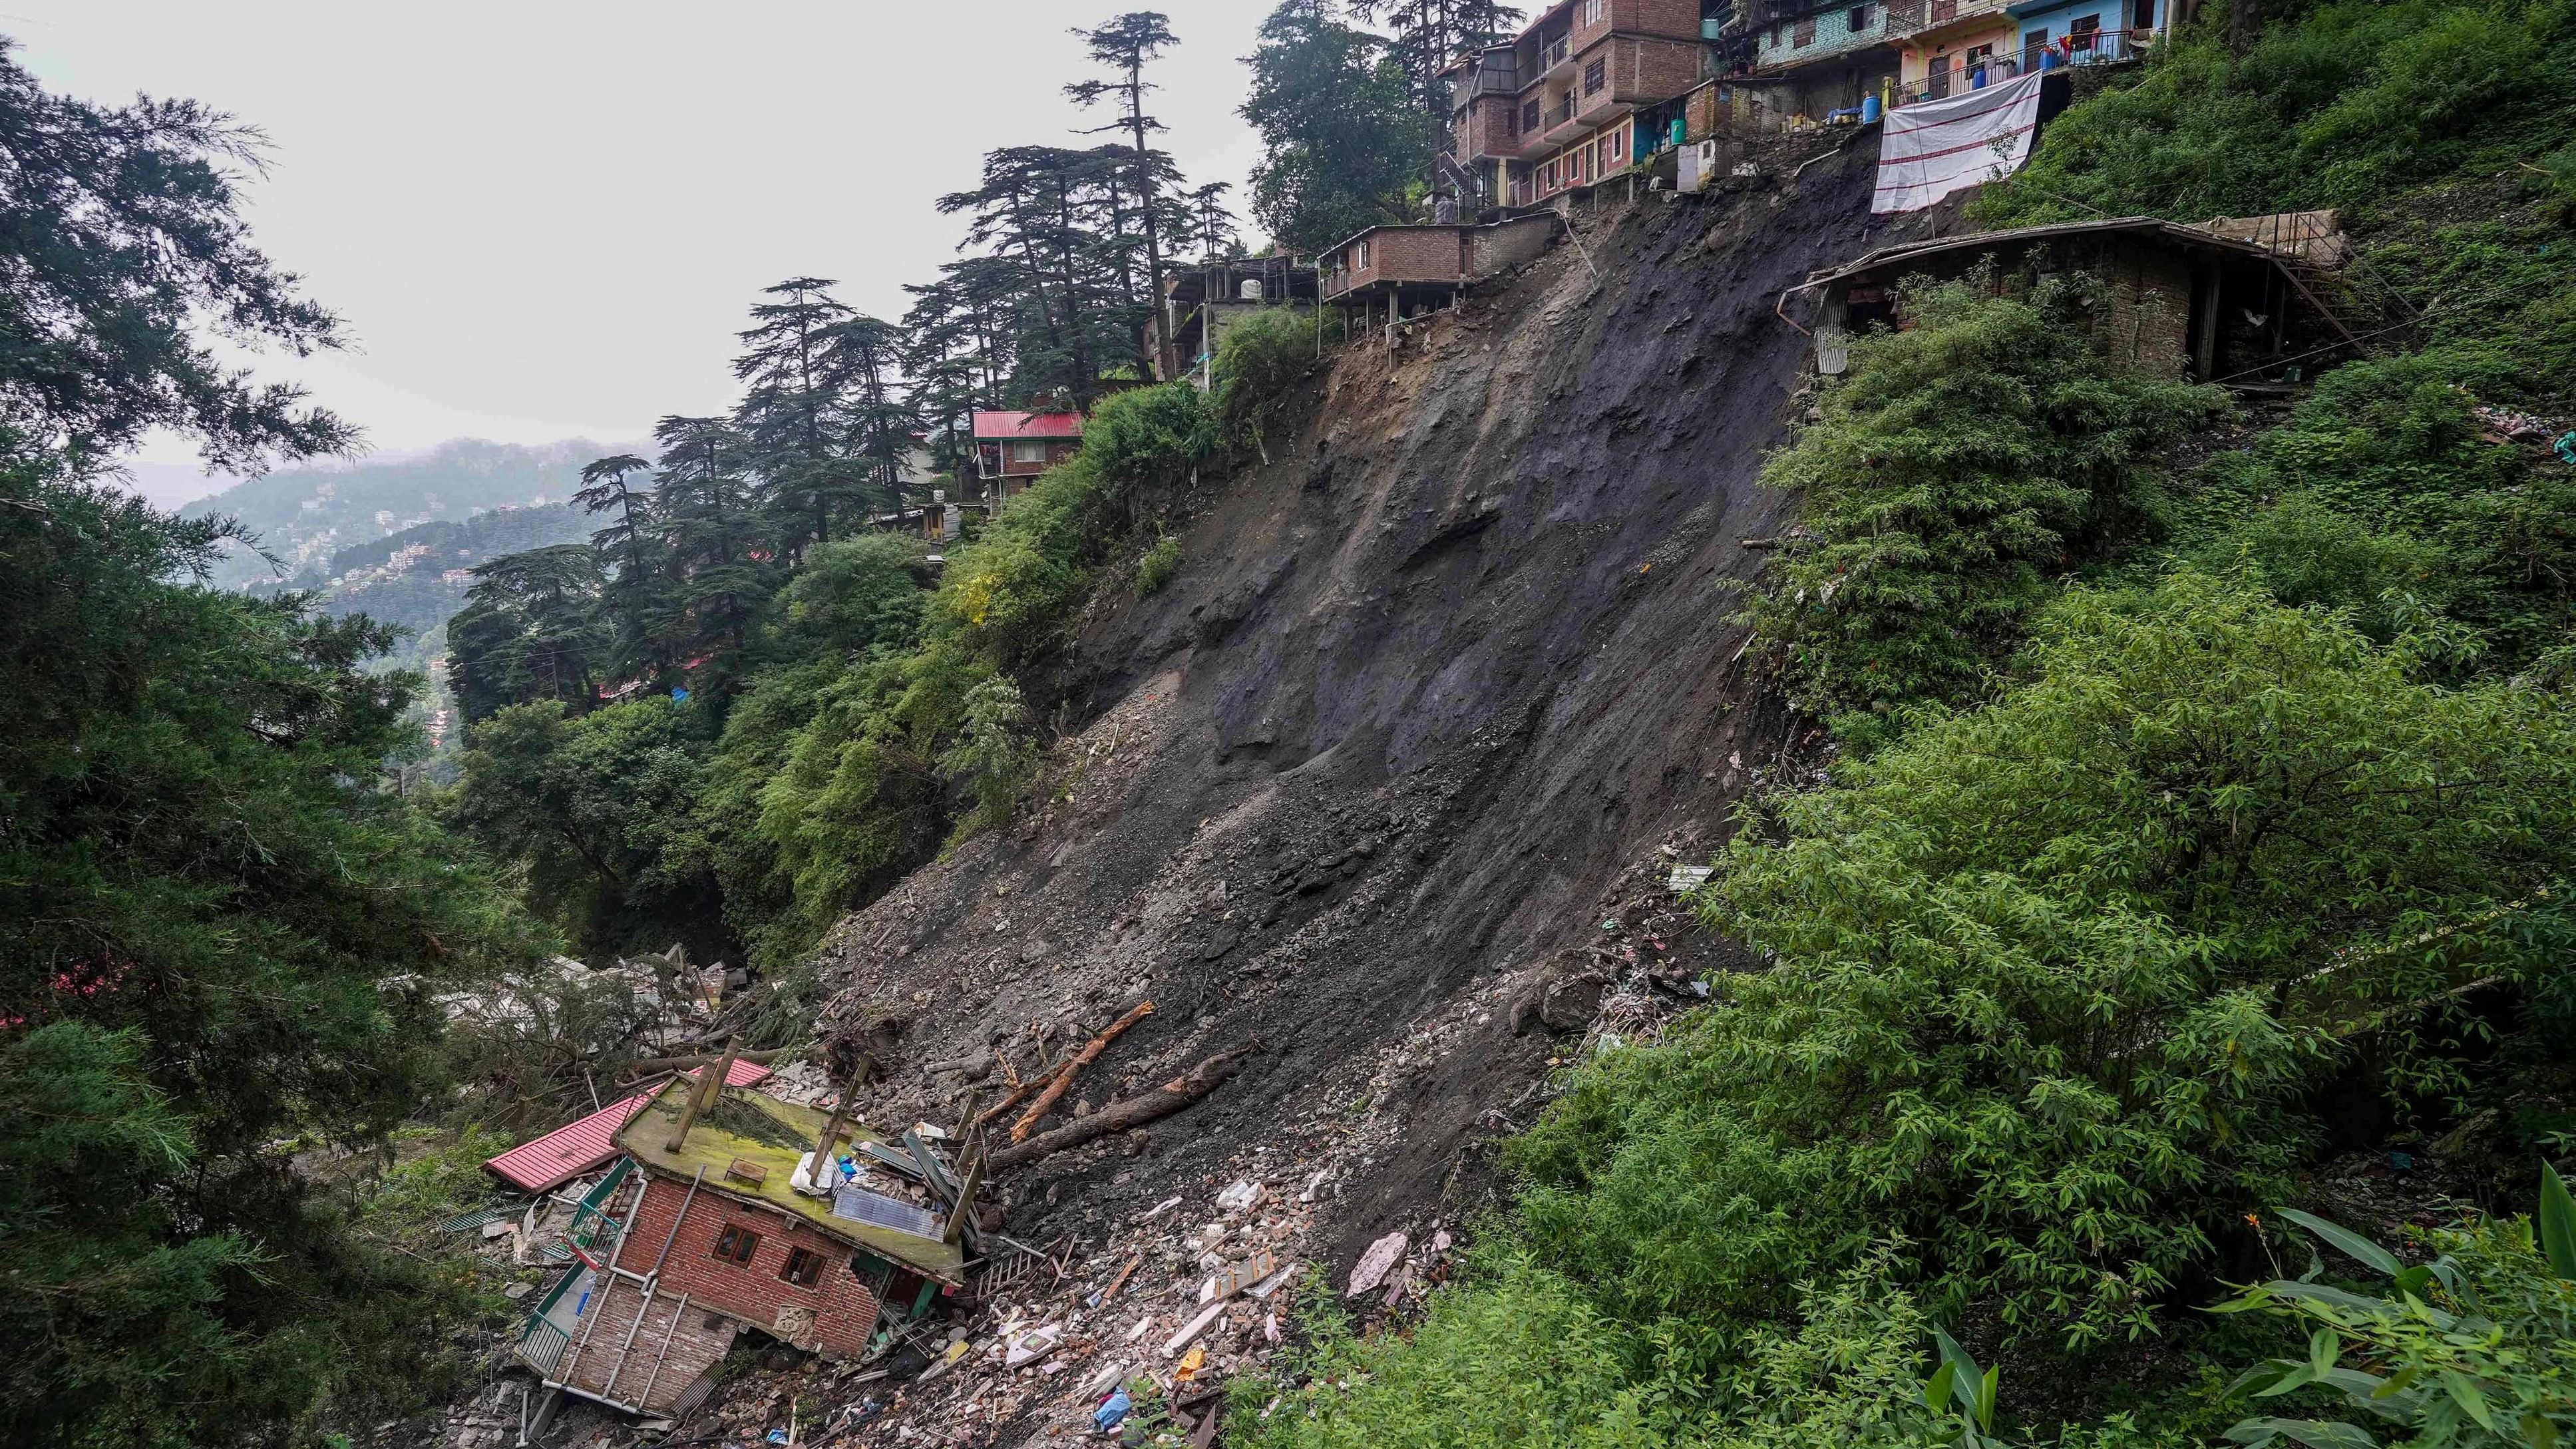 <div class="paragraphs"><p>A landslide affected area where several&nbsp;buildings were damaged after heavy rains, at Krishna Nagar ward in Shimla</p></div>